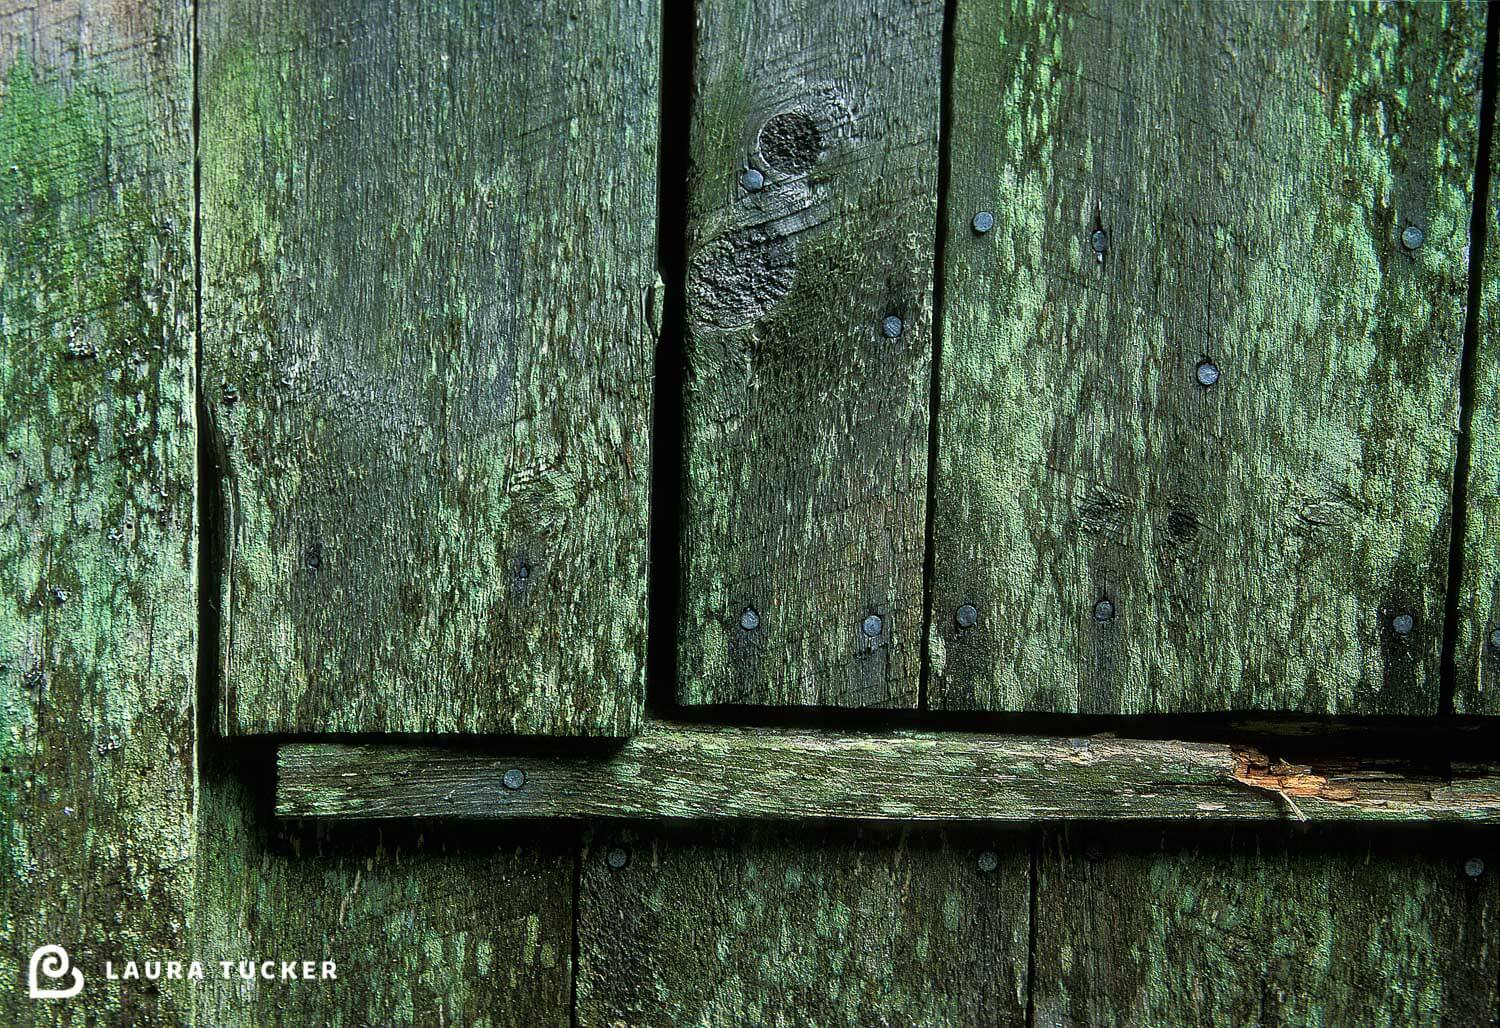 Green moss covers this barn door in New Brunswick